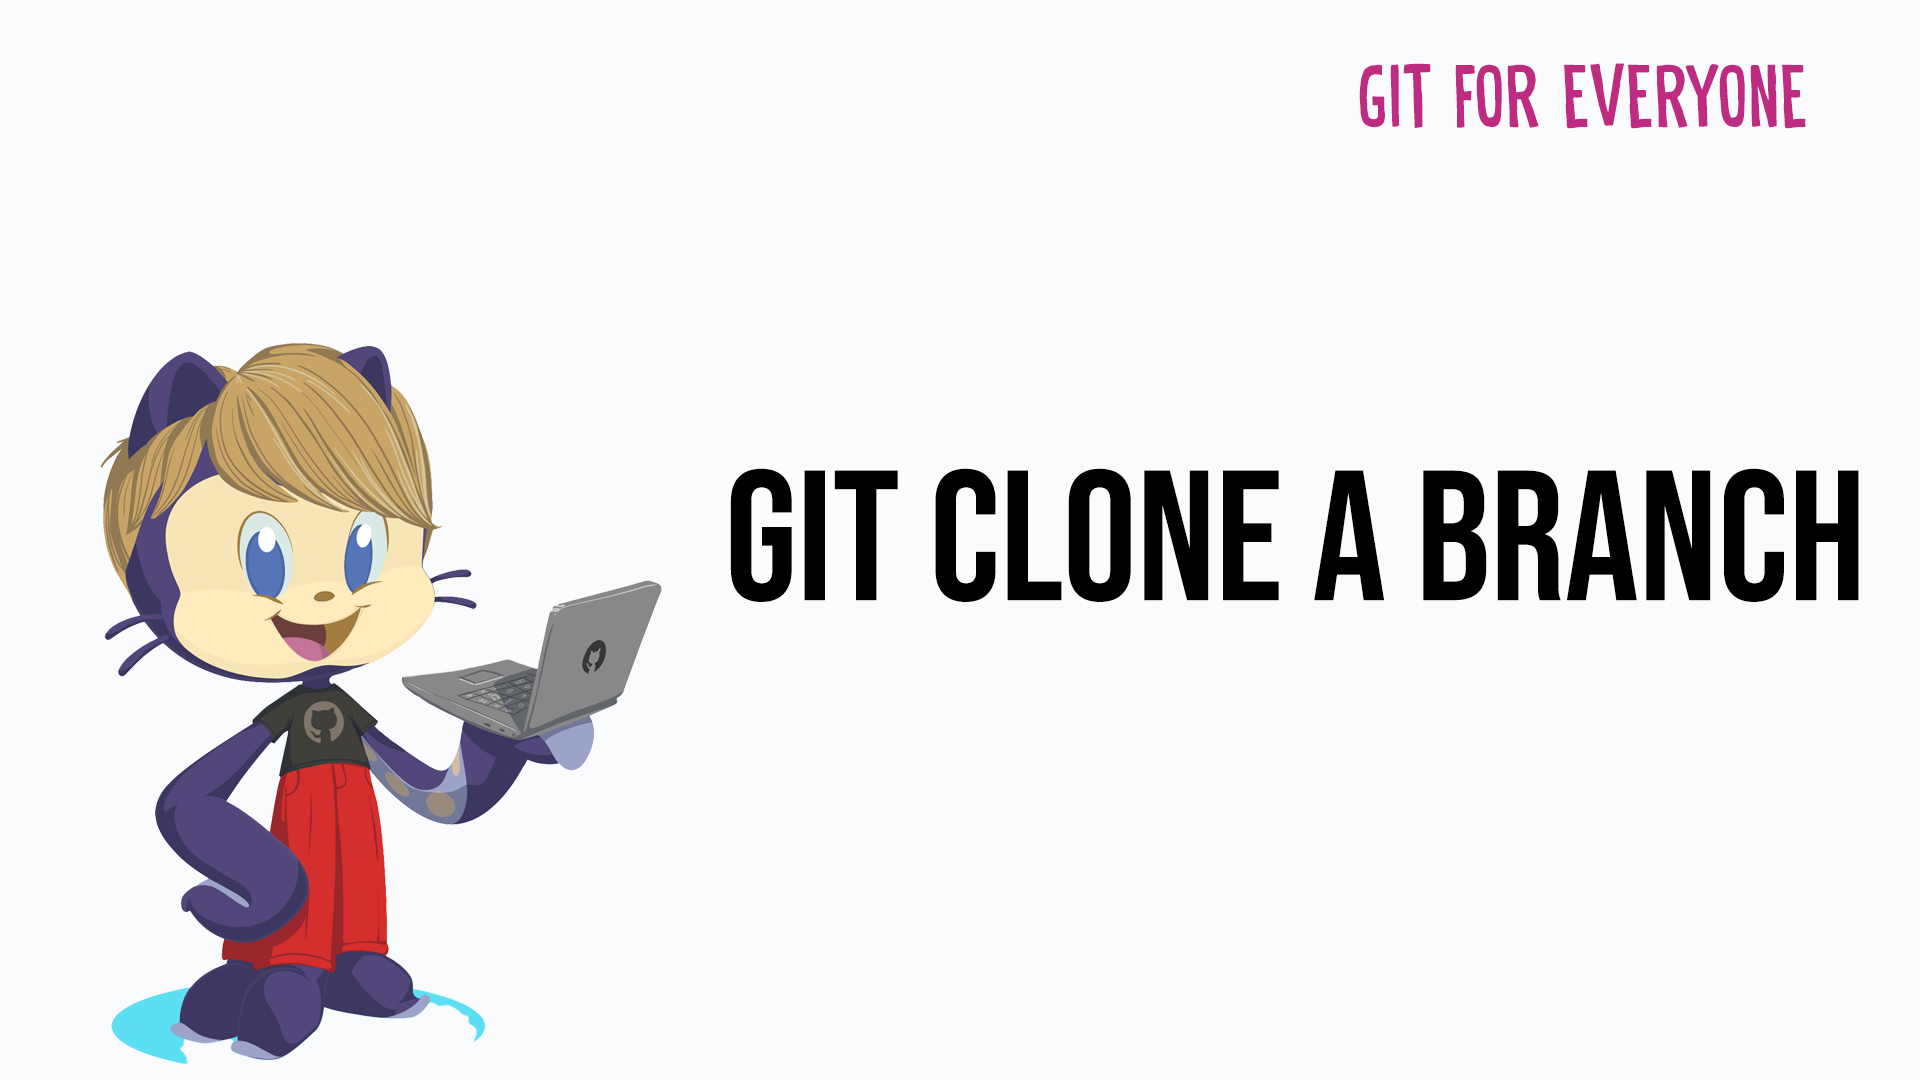 Git clone a branch